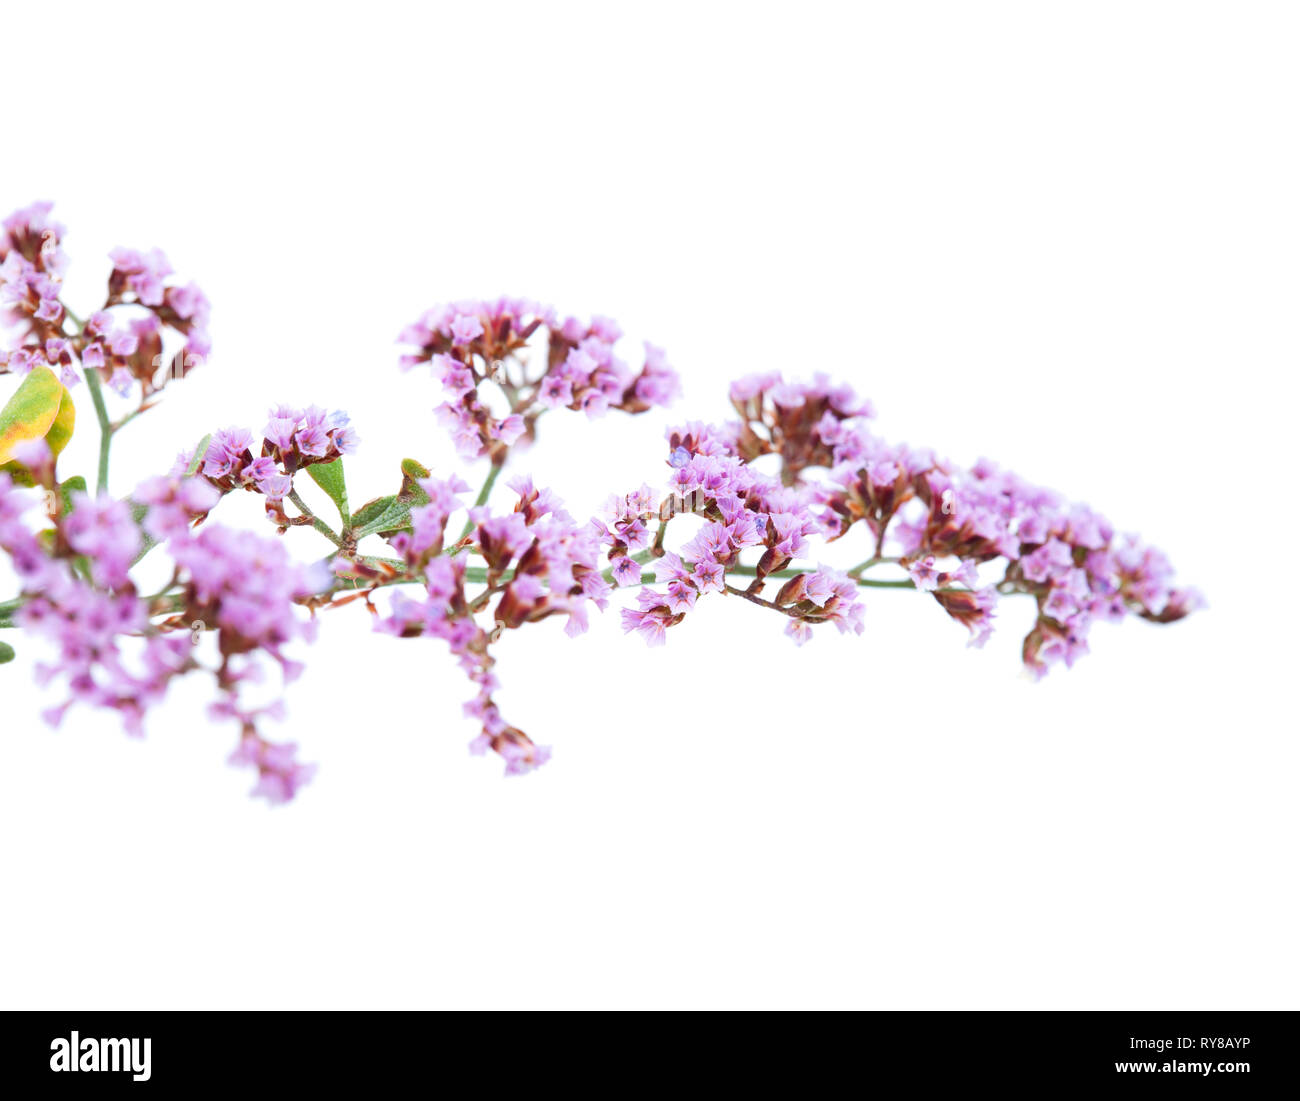 flora of Gran Canaria - Limonium isolated on white background Stock Photo